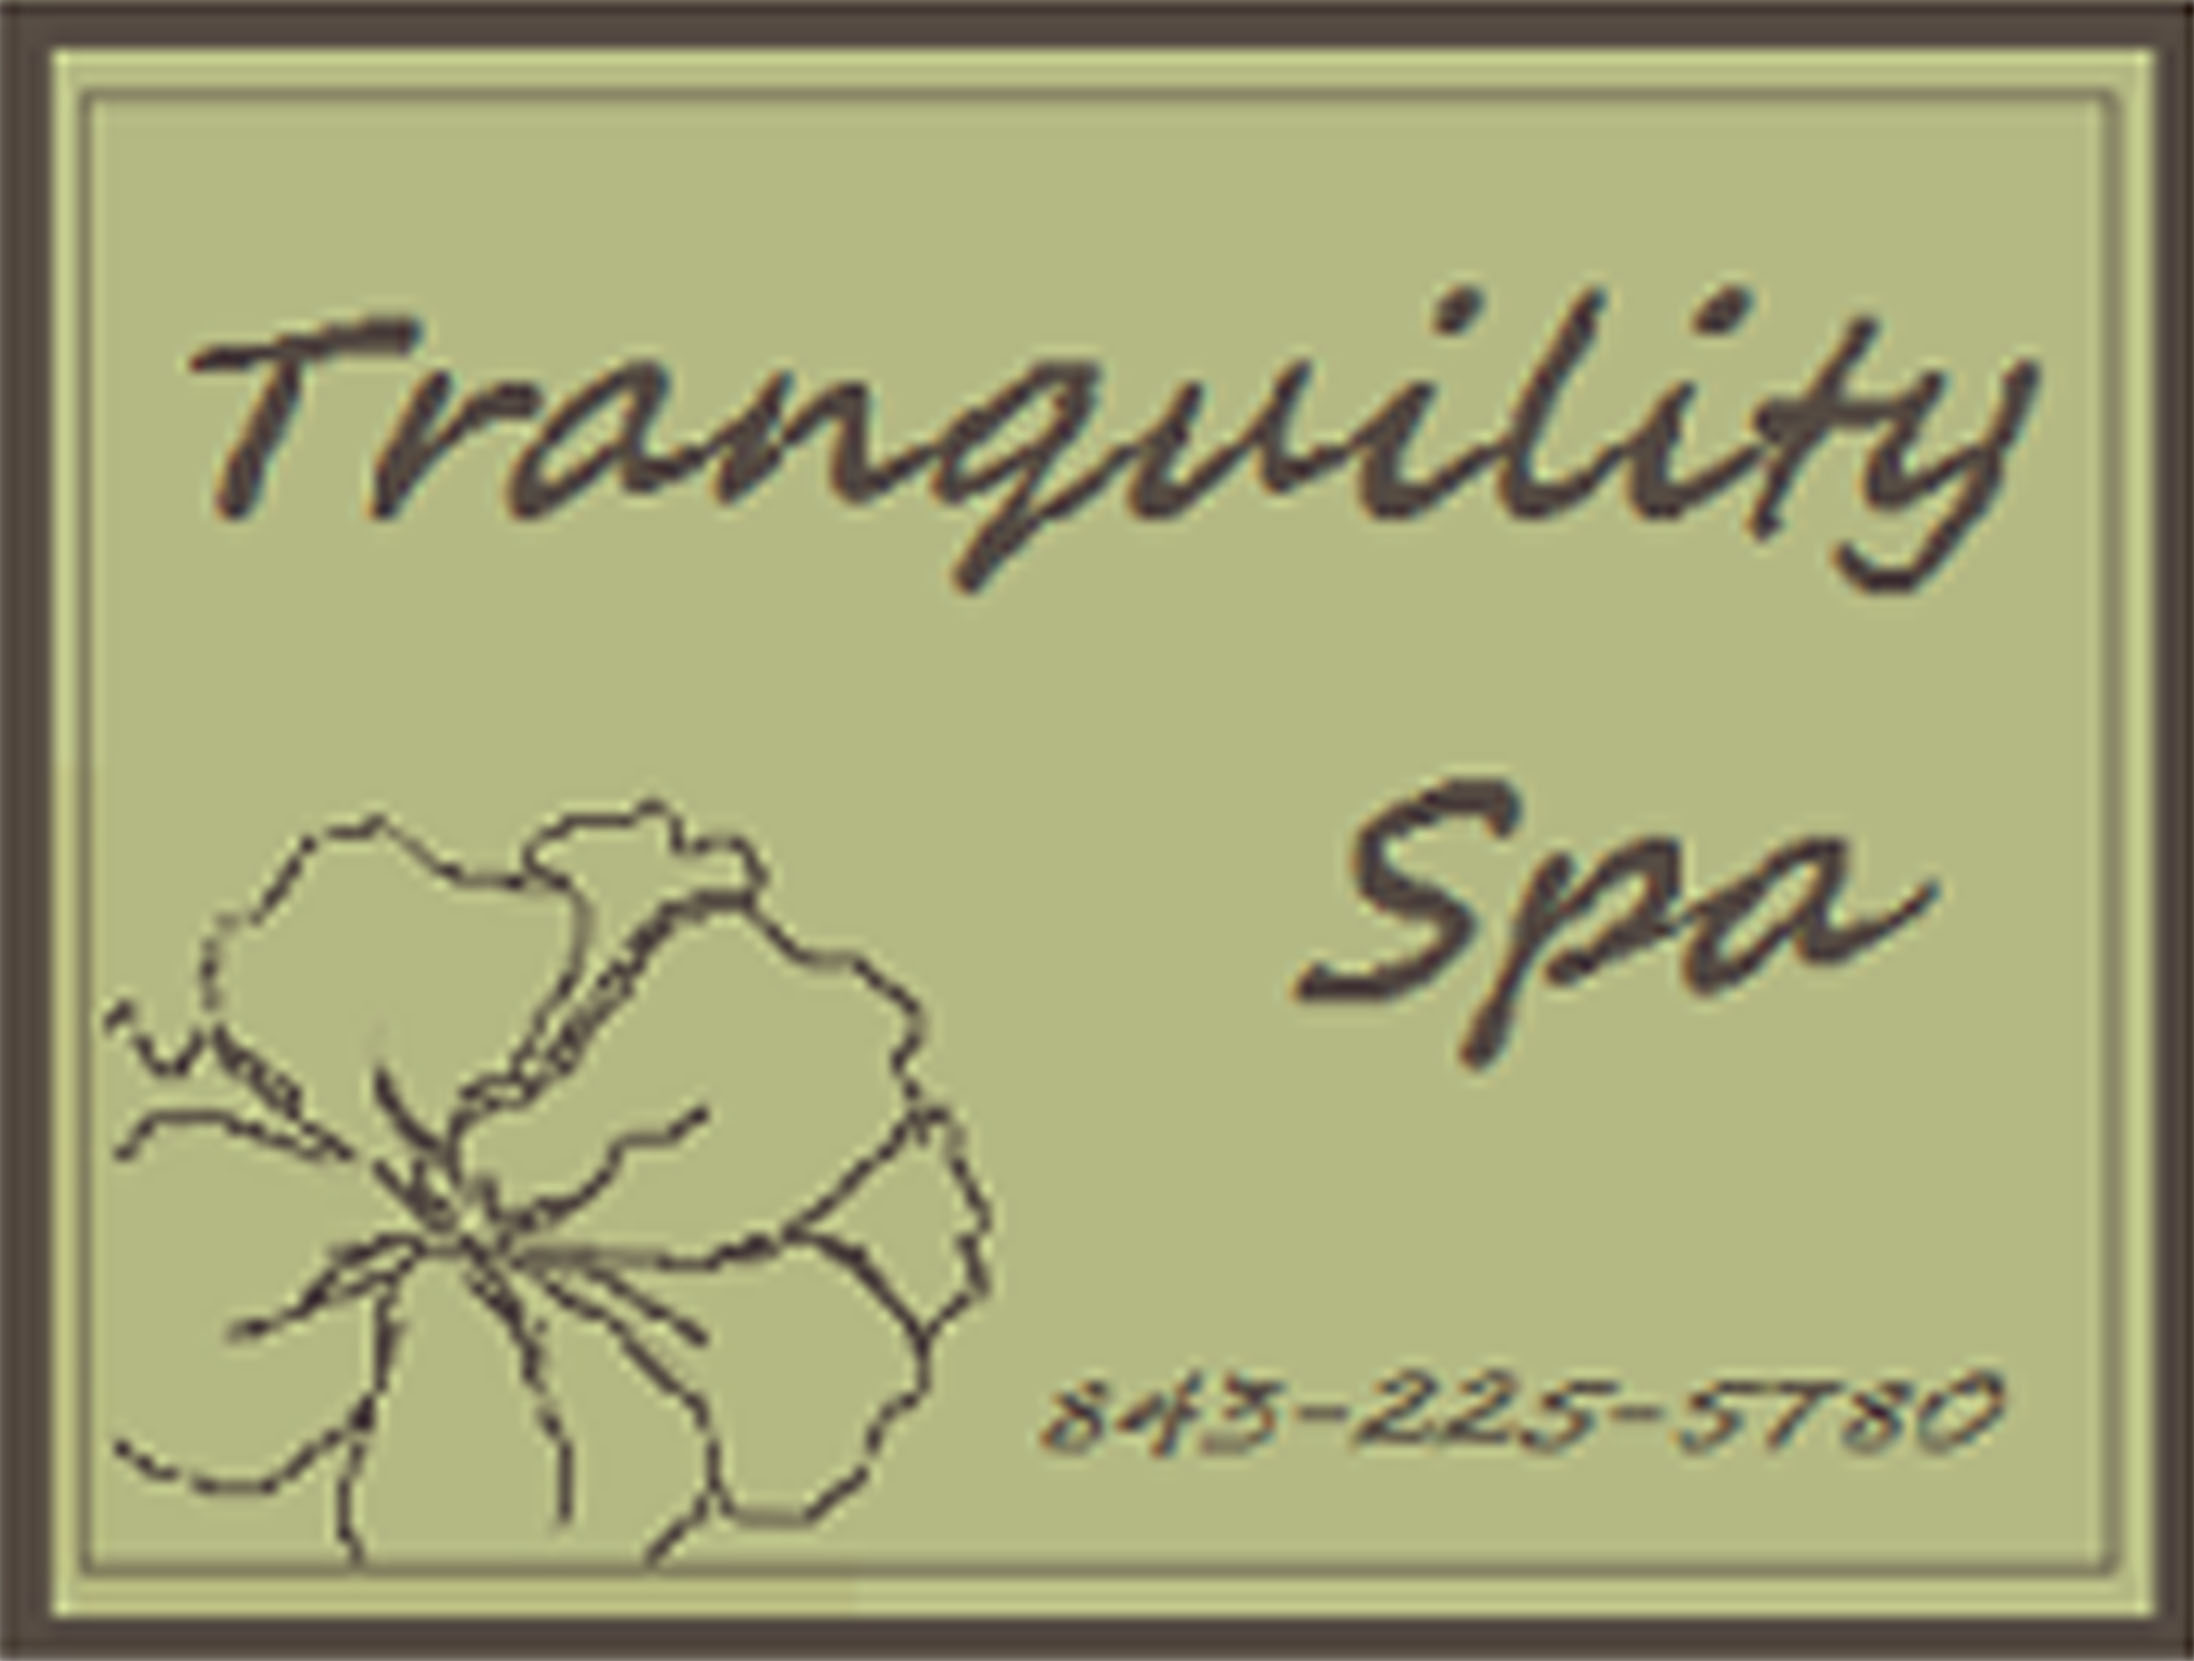 Tranquility Spa, LLC